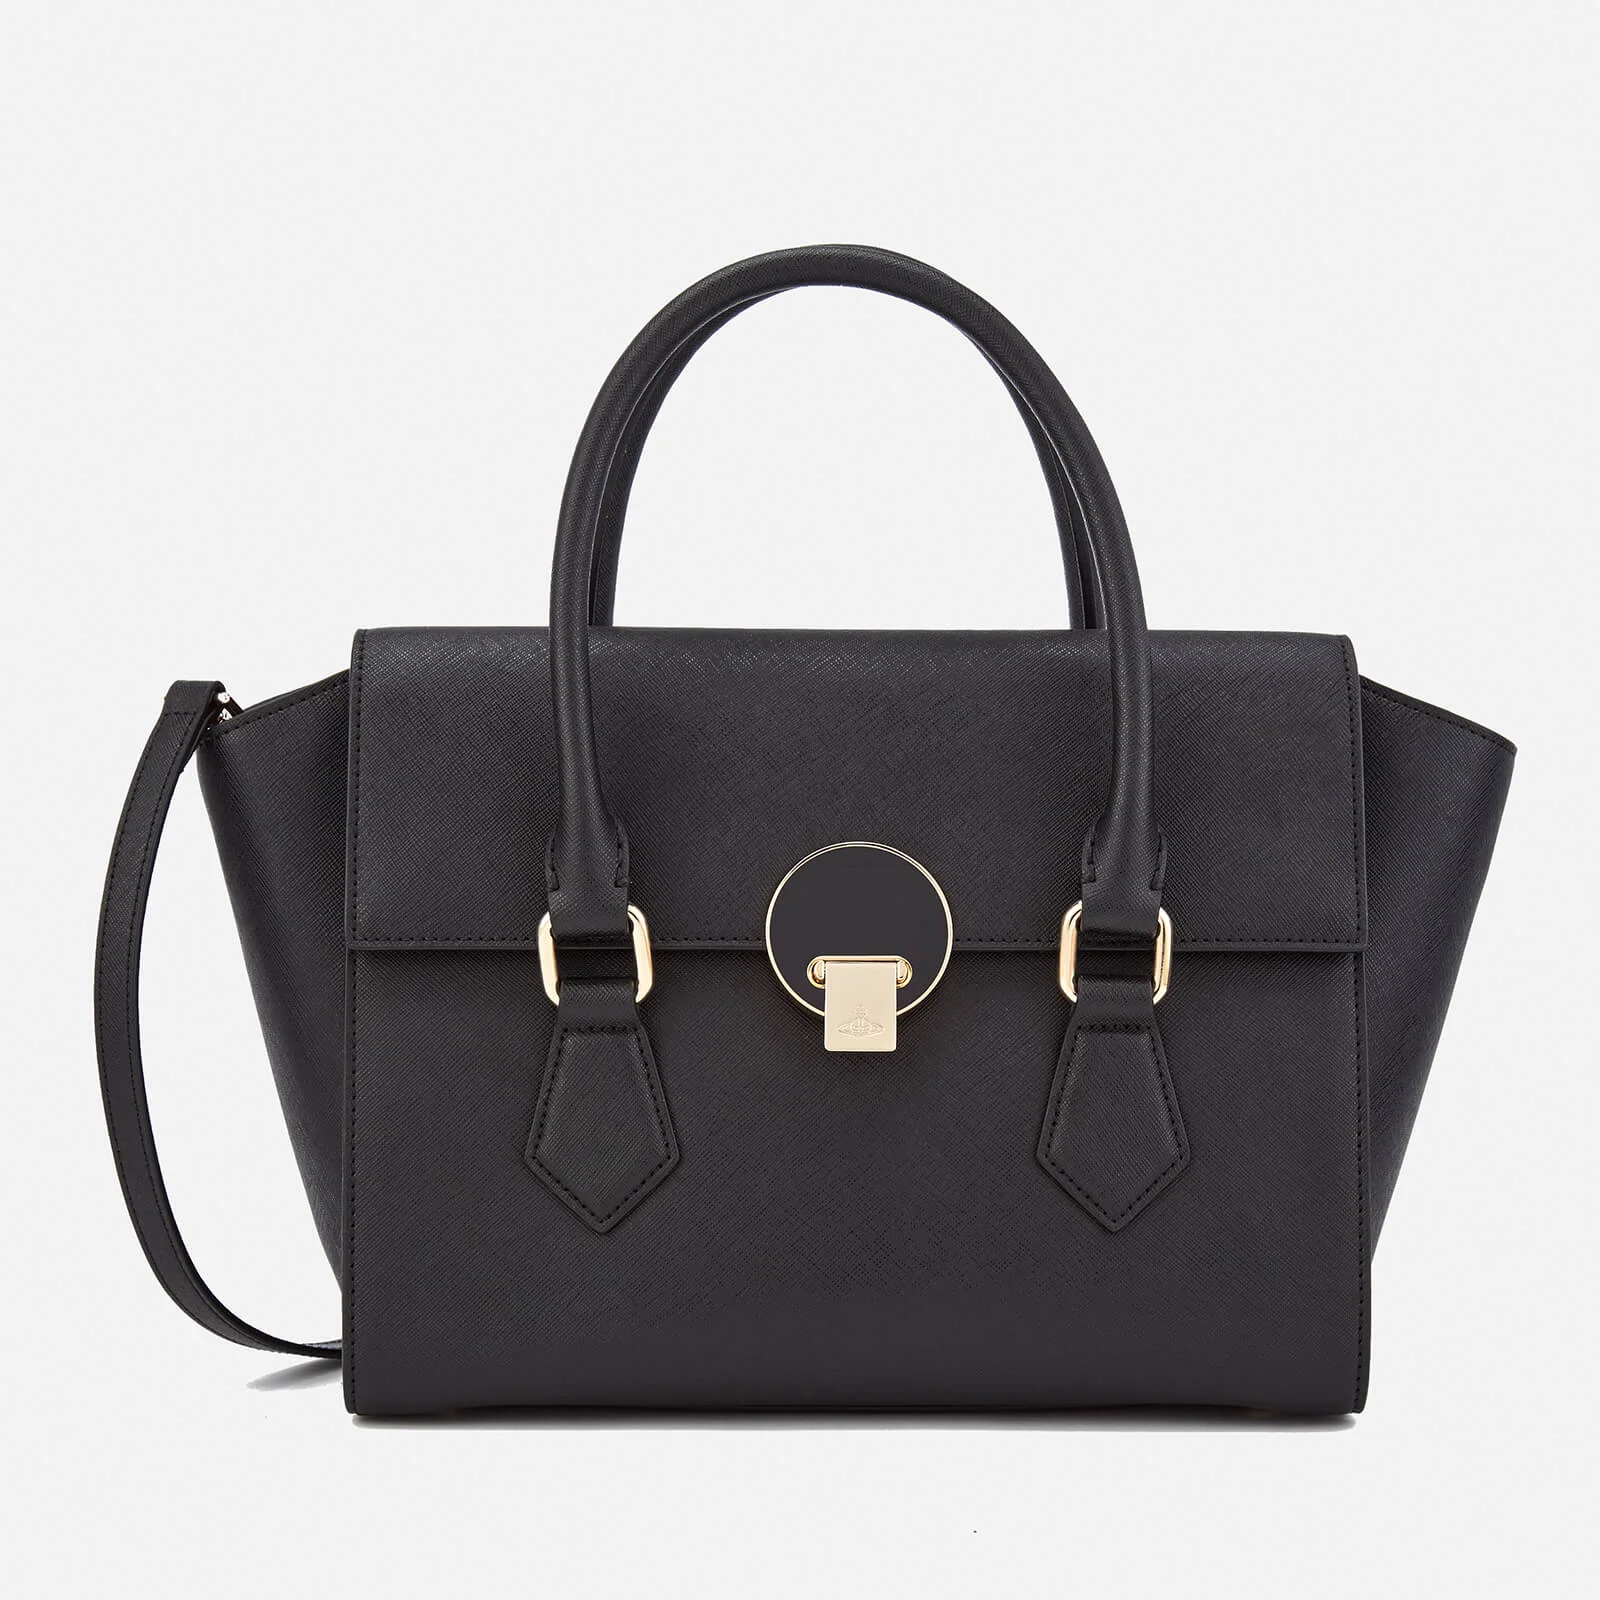 Vivienne Westwood Women's Opio Saffiano Medium Handbag - Black Image 1